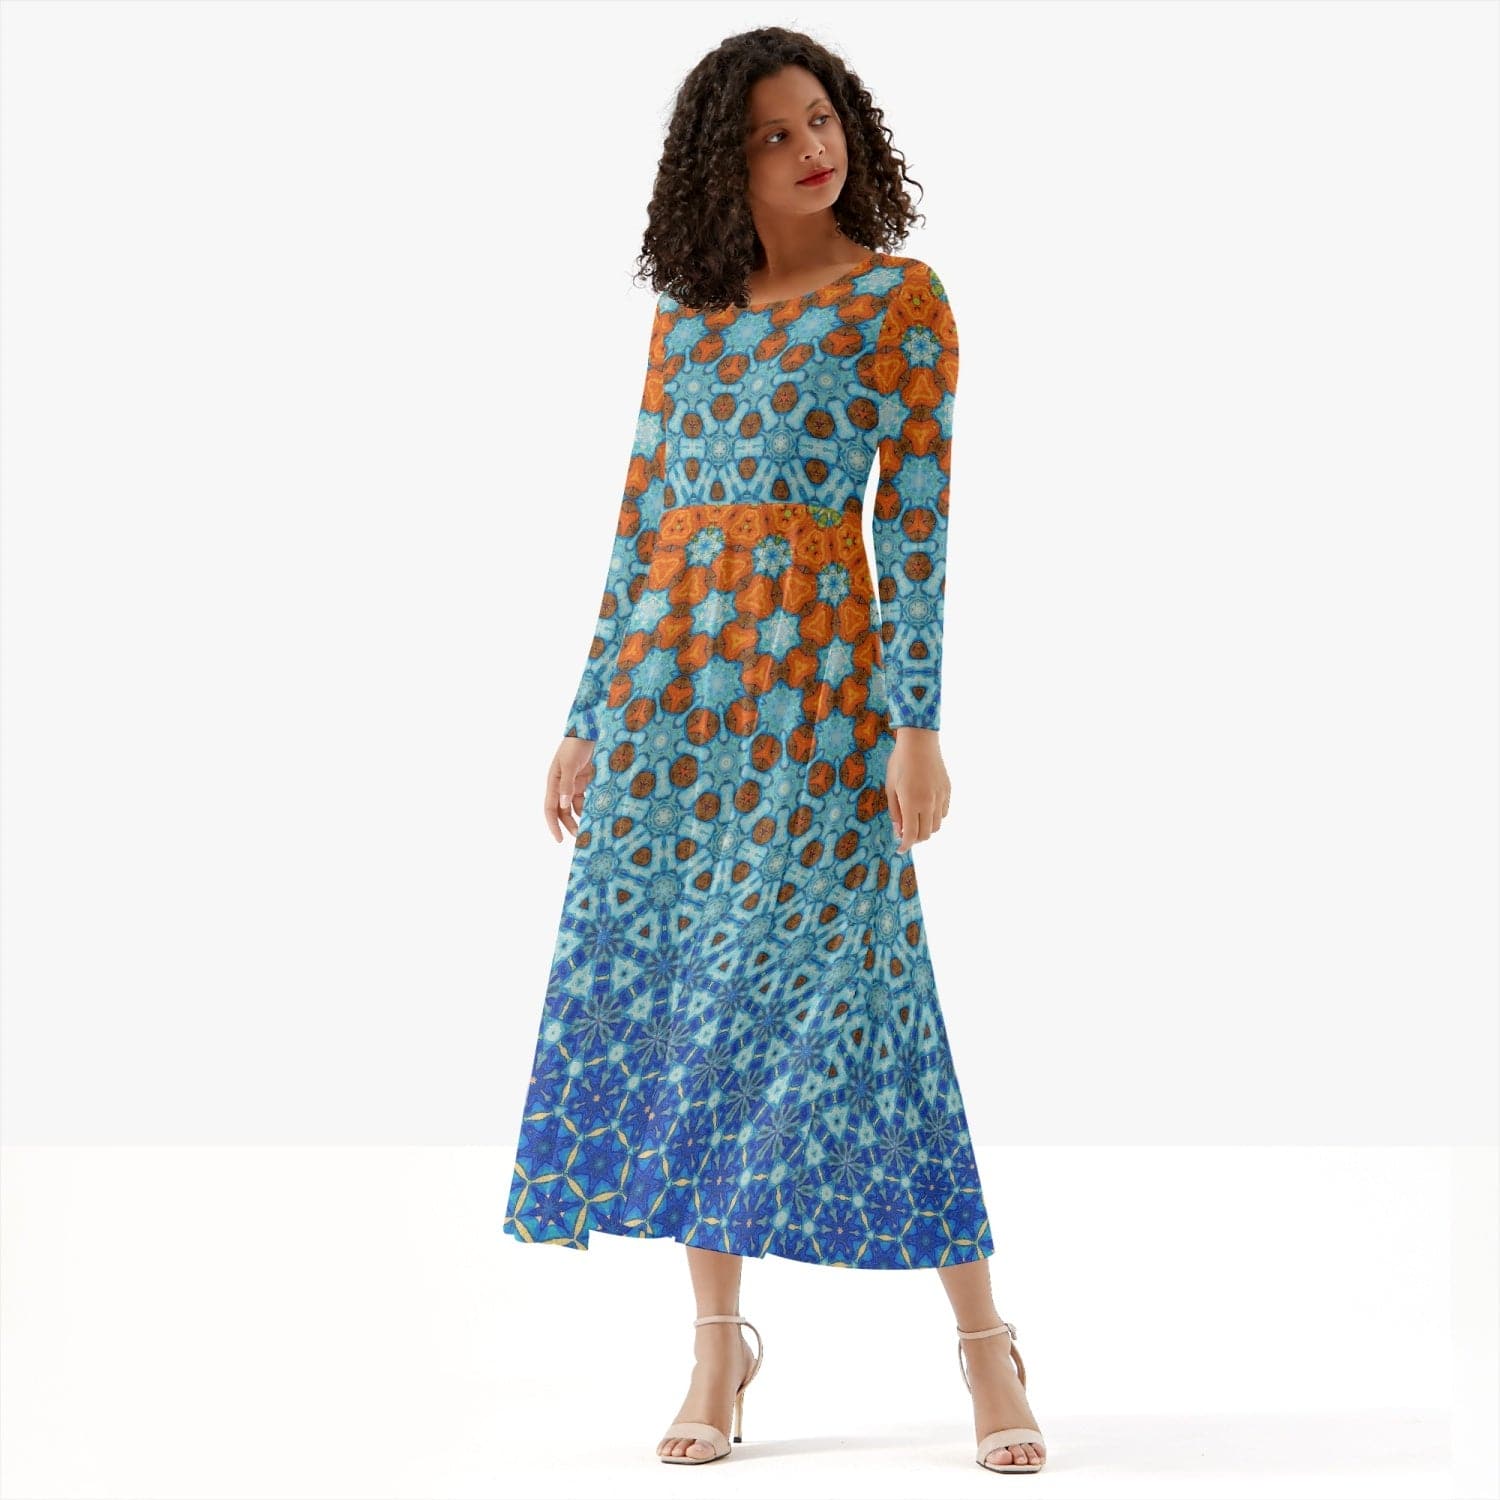 Orange and Blue Joy! trendy 2022  Women's Long-Sleeve One-piece Dress, by Sensus Studio Design